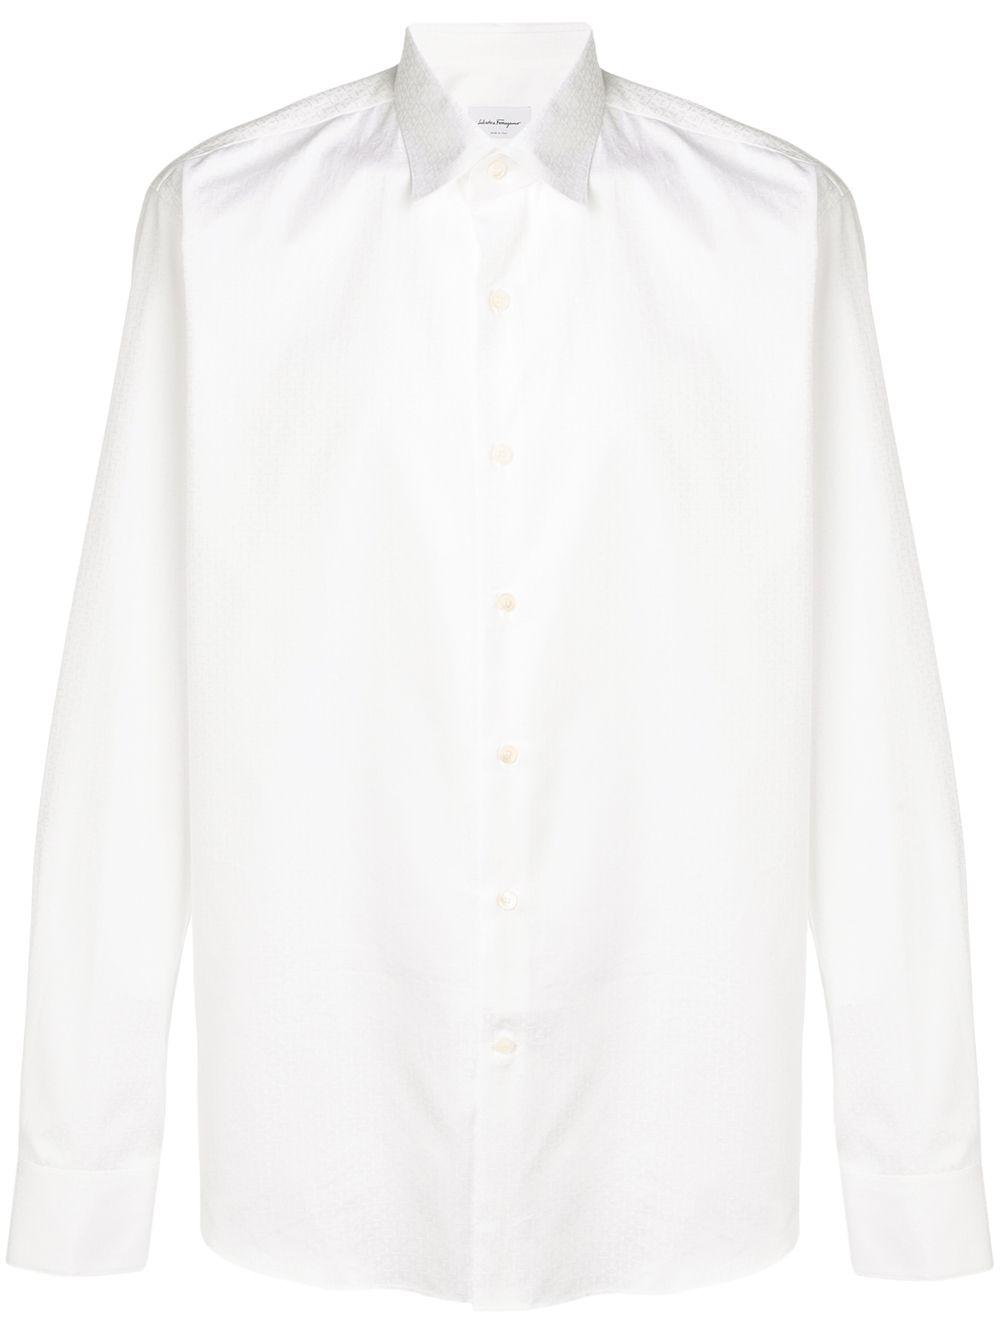 Ferragamo Cotton Logo Print Shirt in White for Men - Lyst